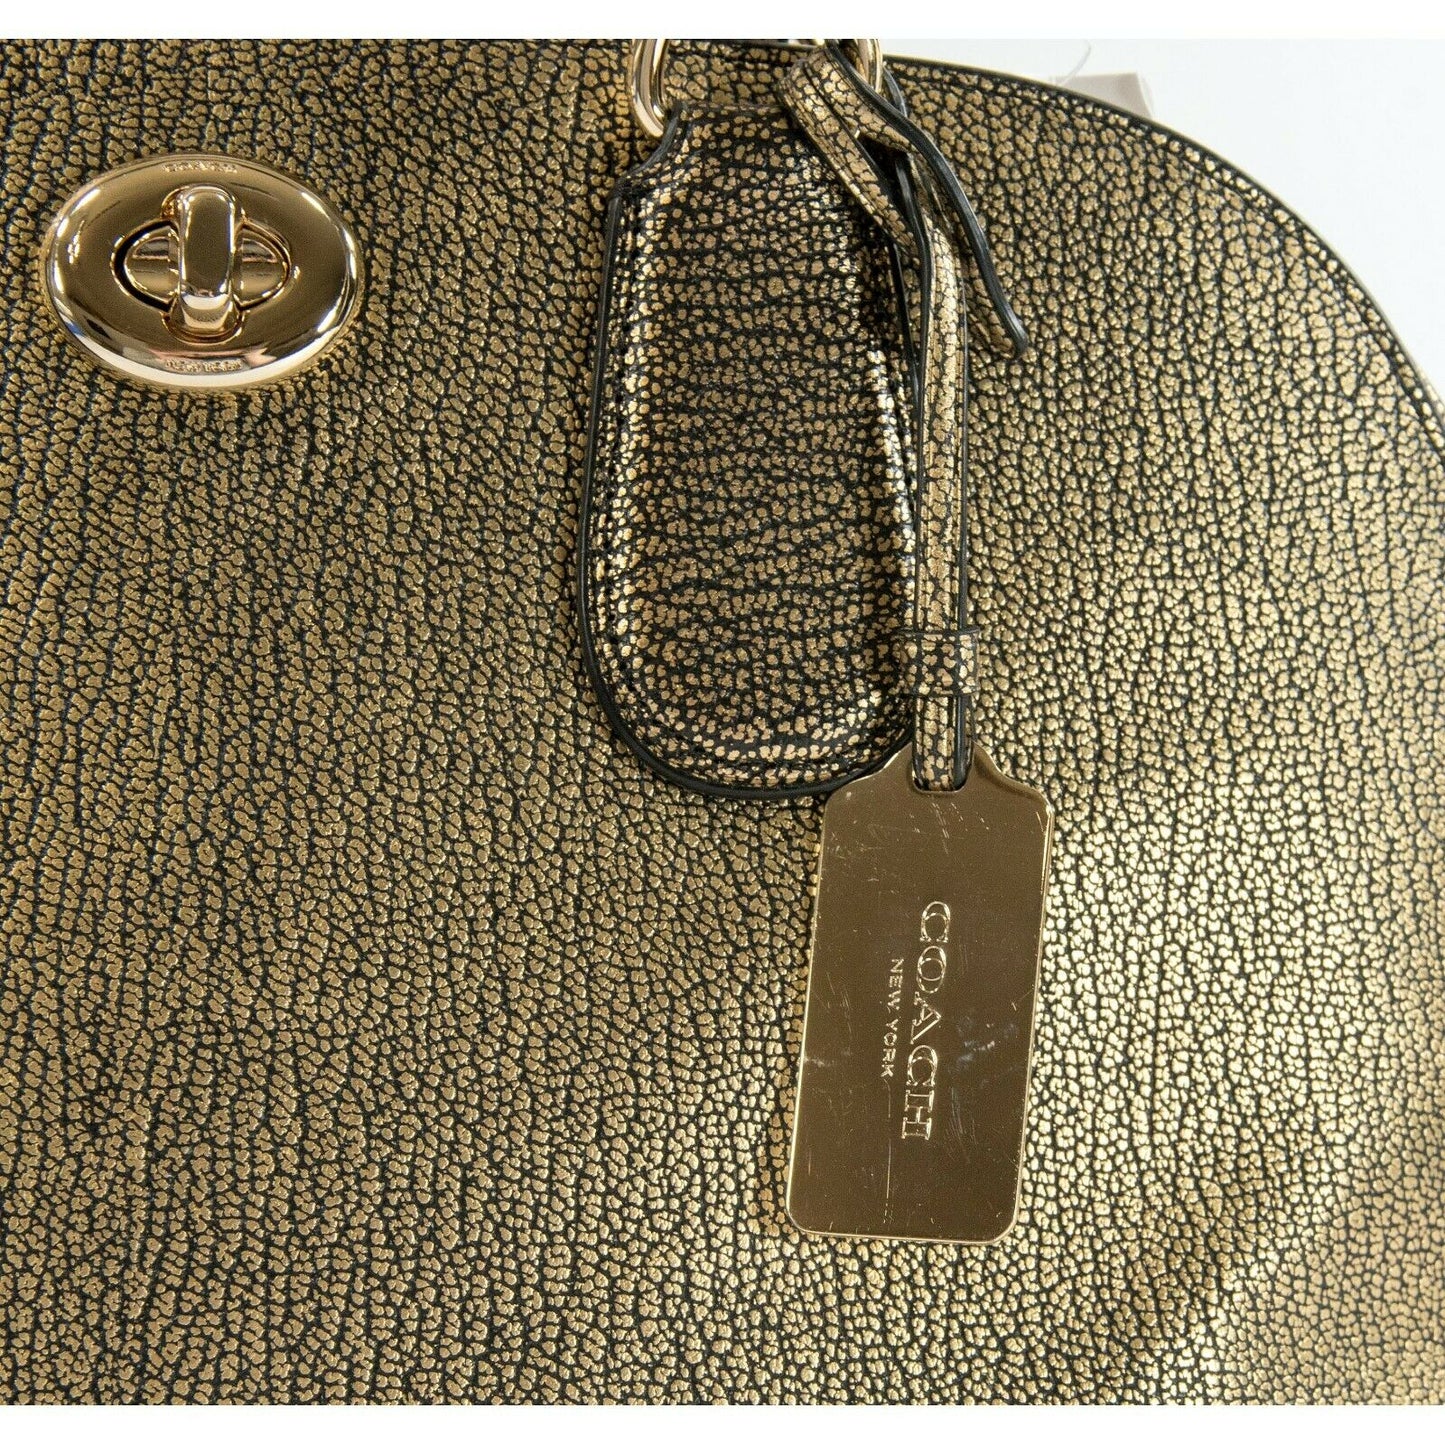 Coach Prince Street Mottled Gold LARGE Leather Dome Satchel Handbag NWT